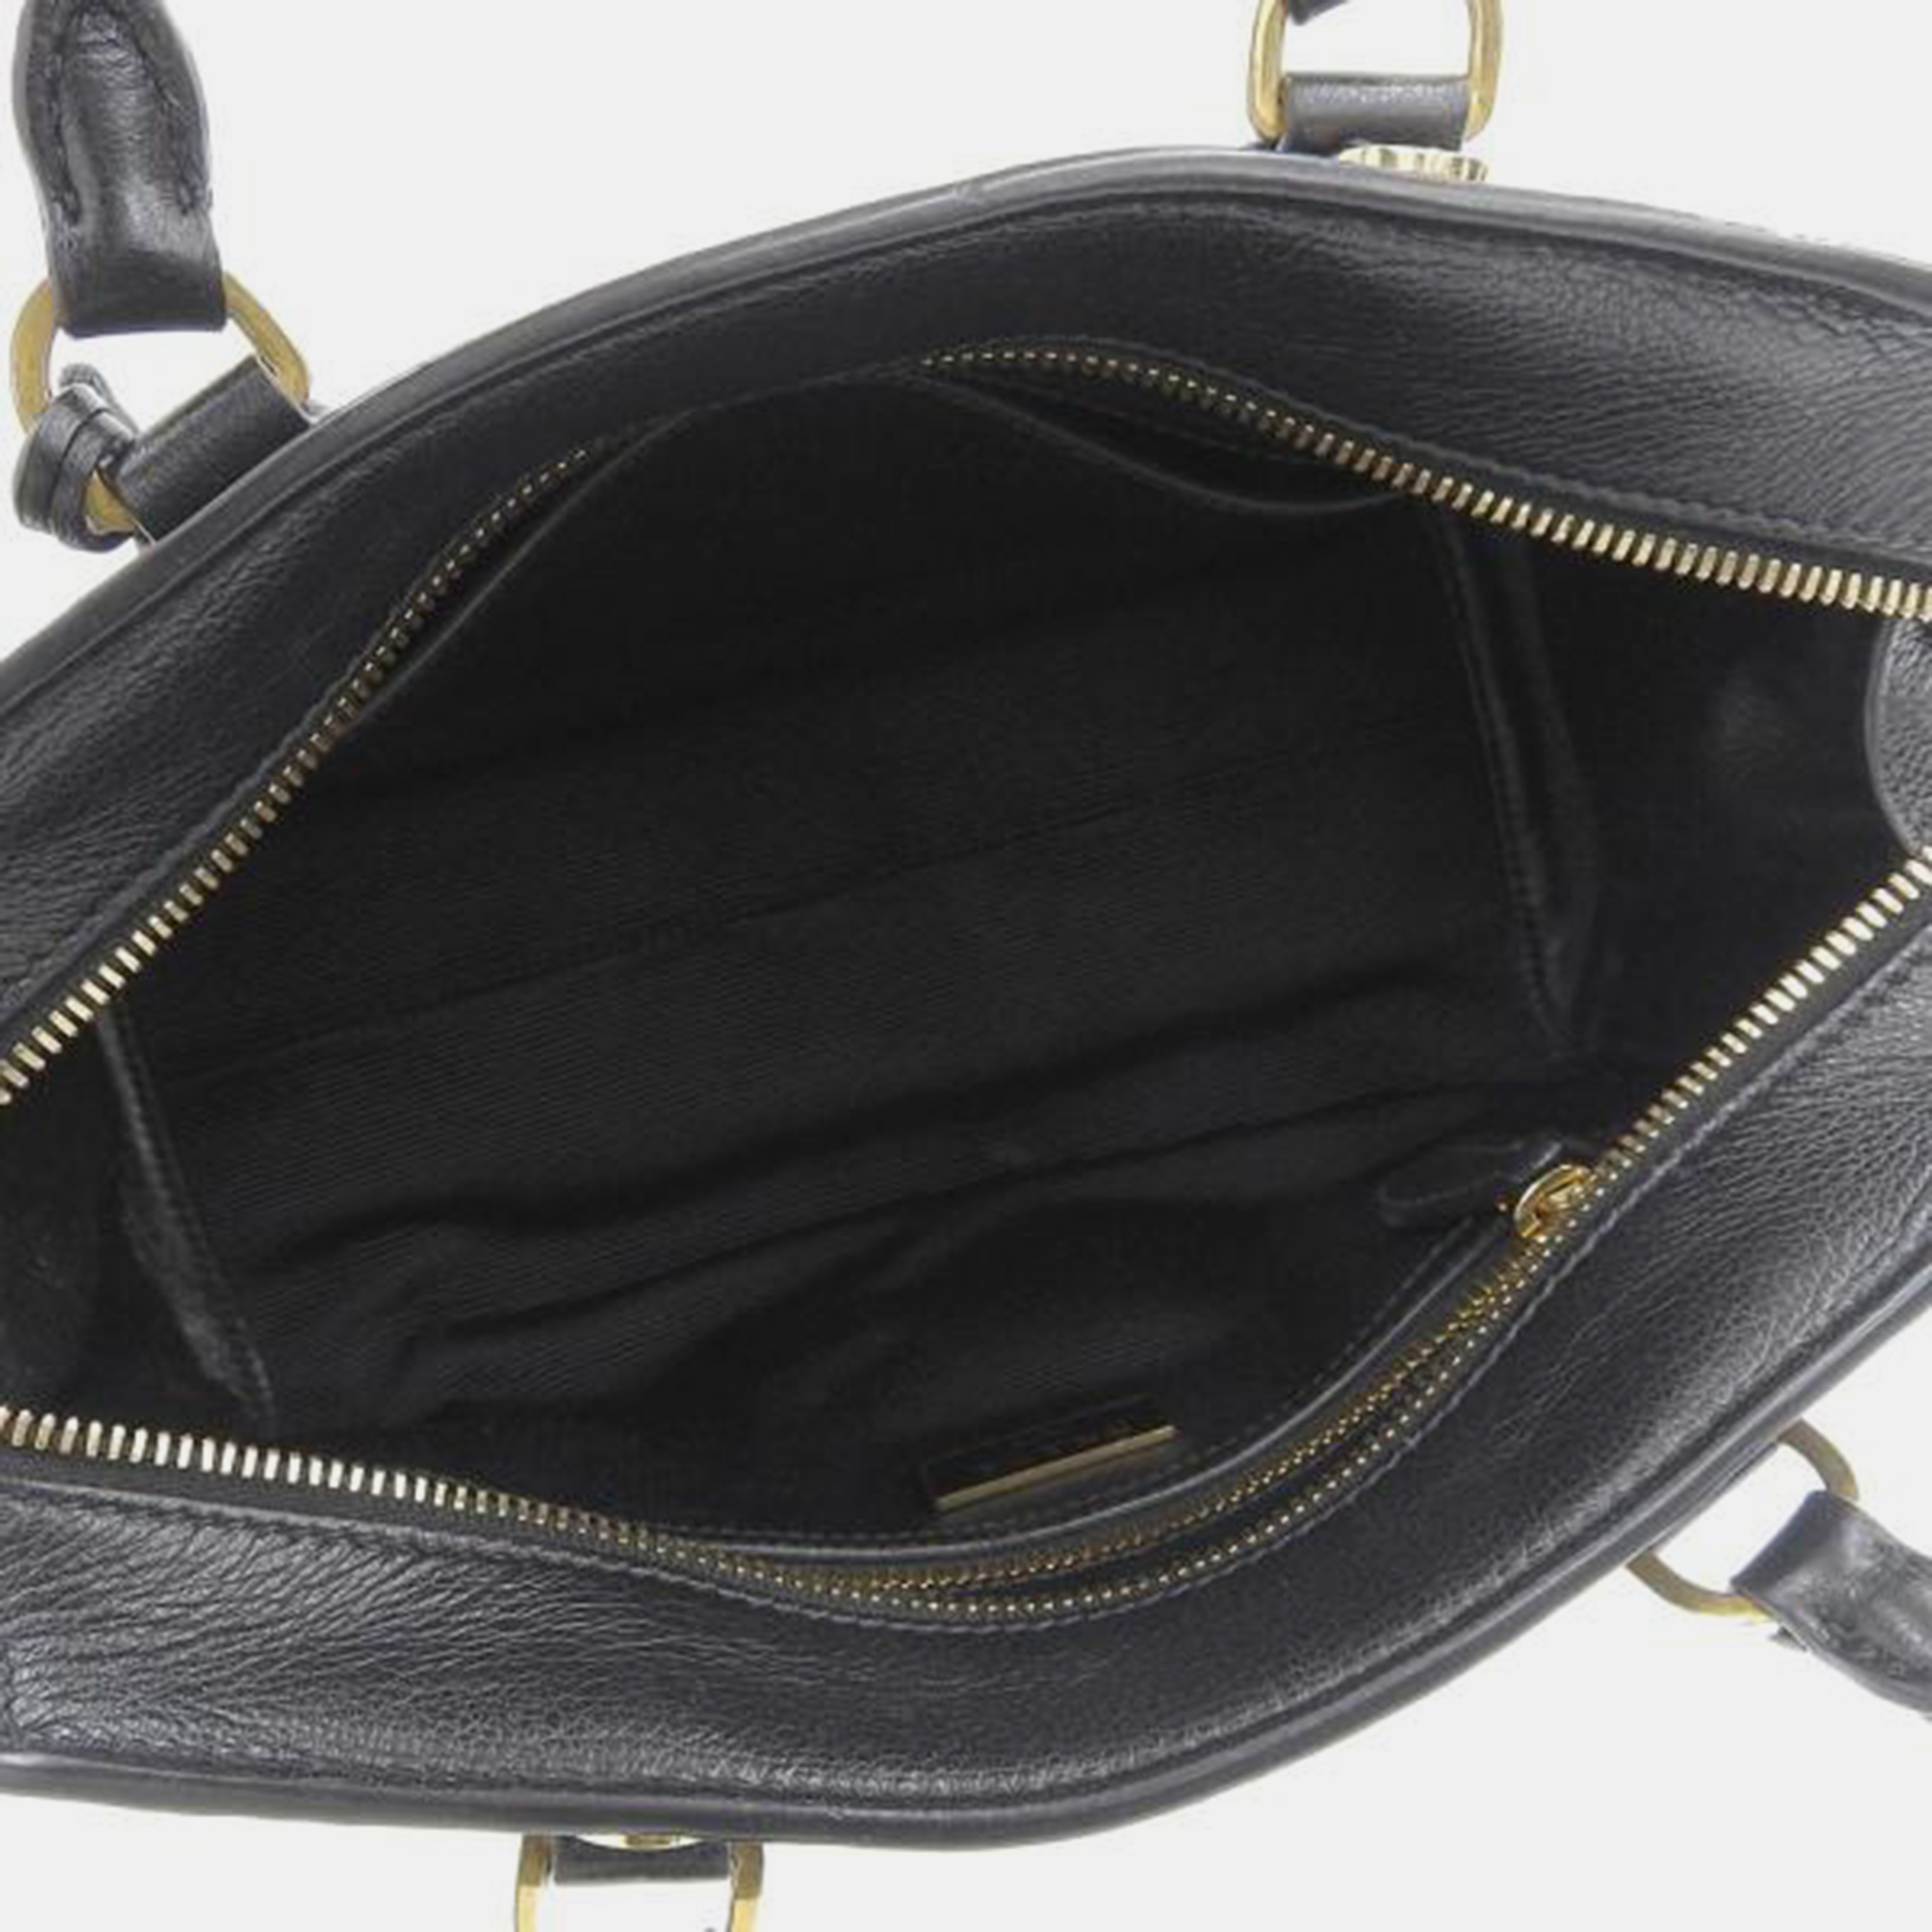 Prada Black Leather Top Handle Handbag